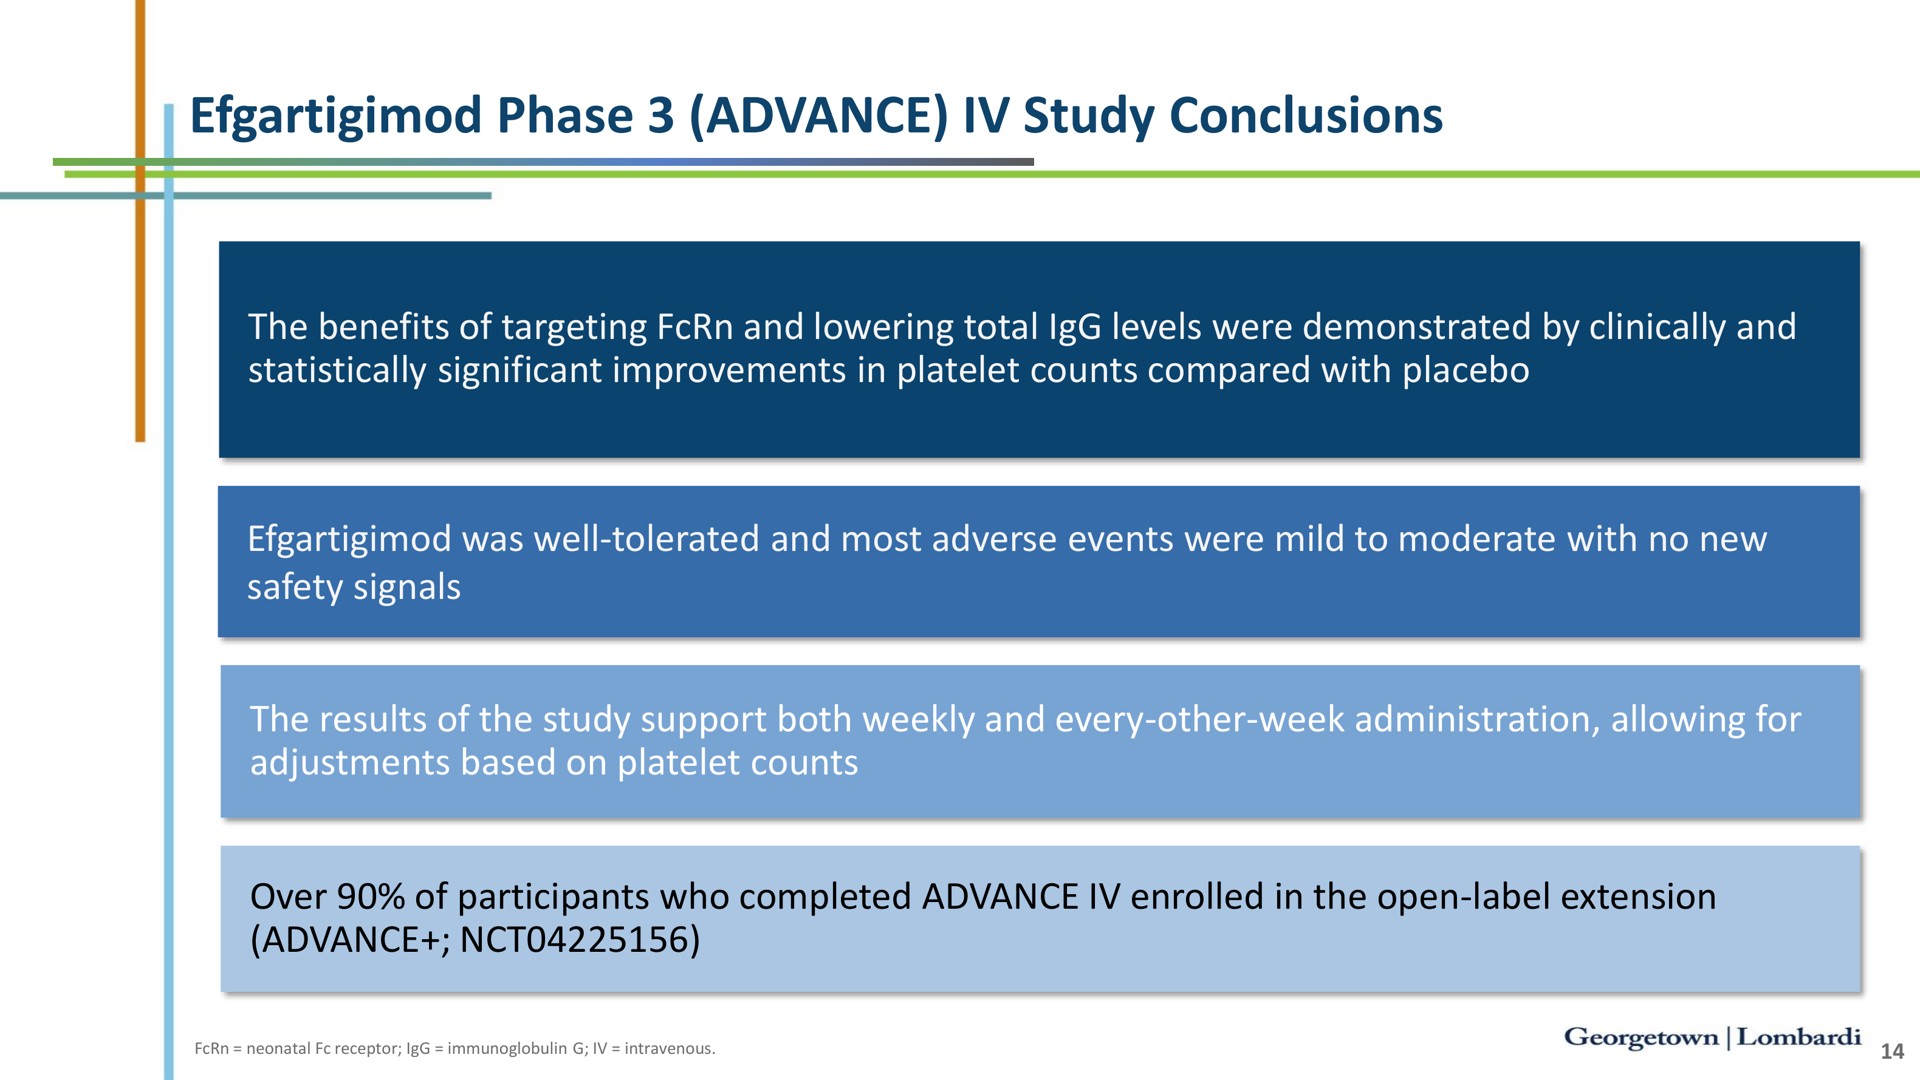 phase advance study conclusions | argenx SE